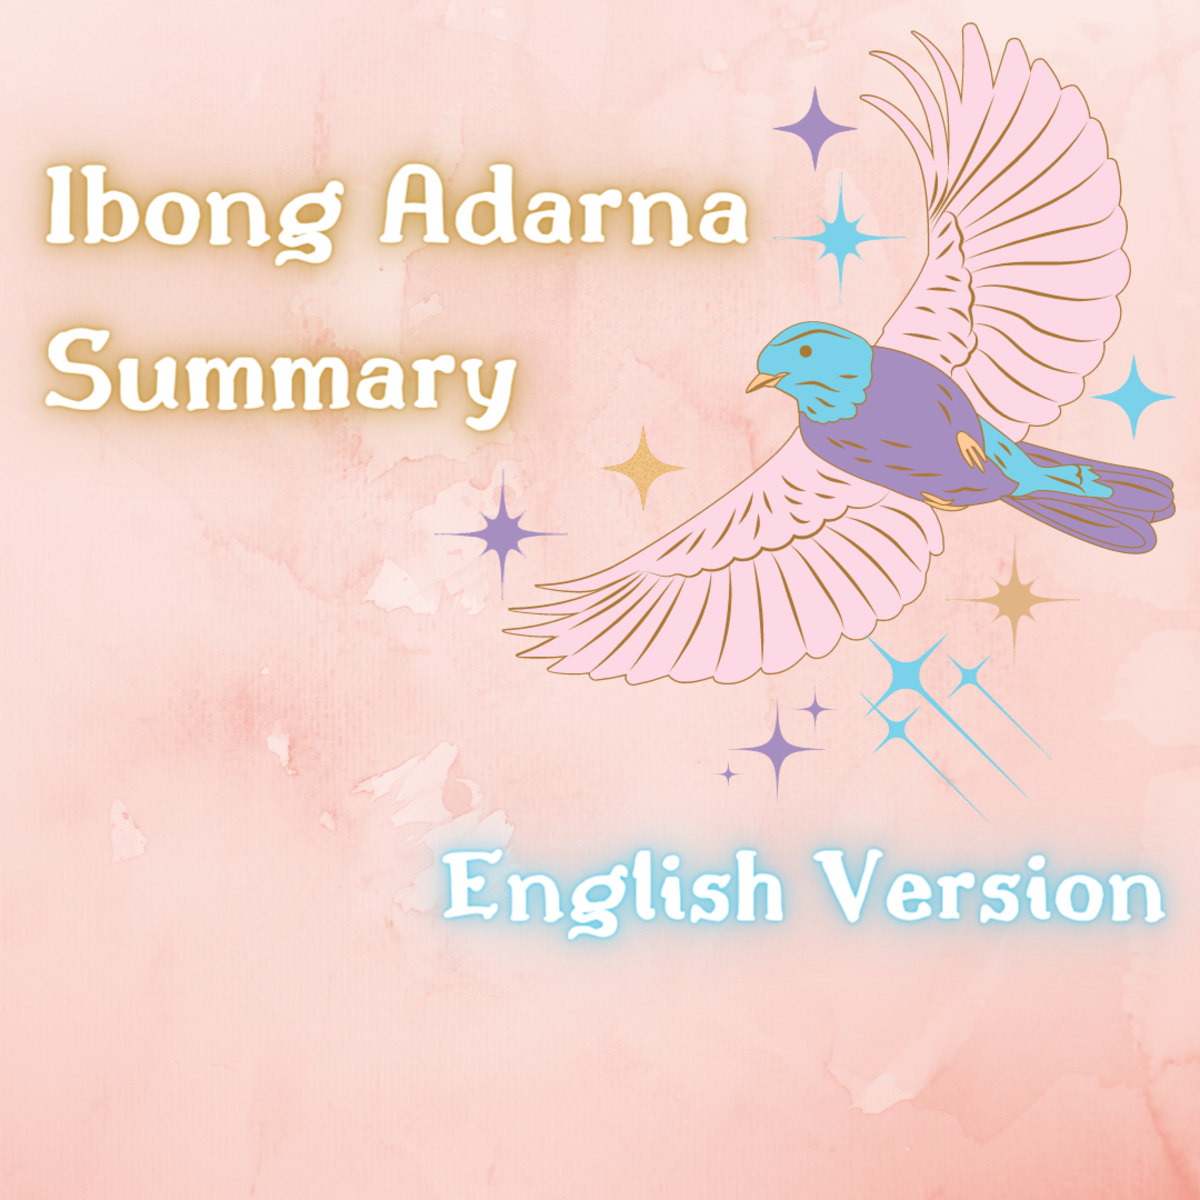 Ibong Adarna Summary in English